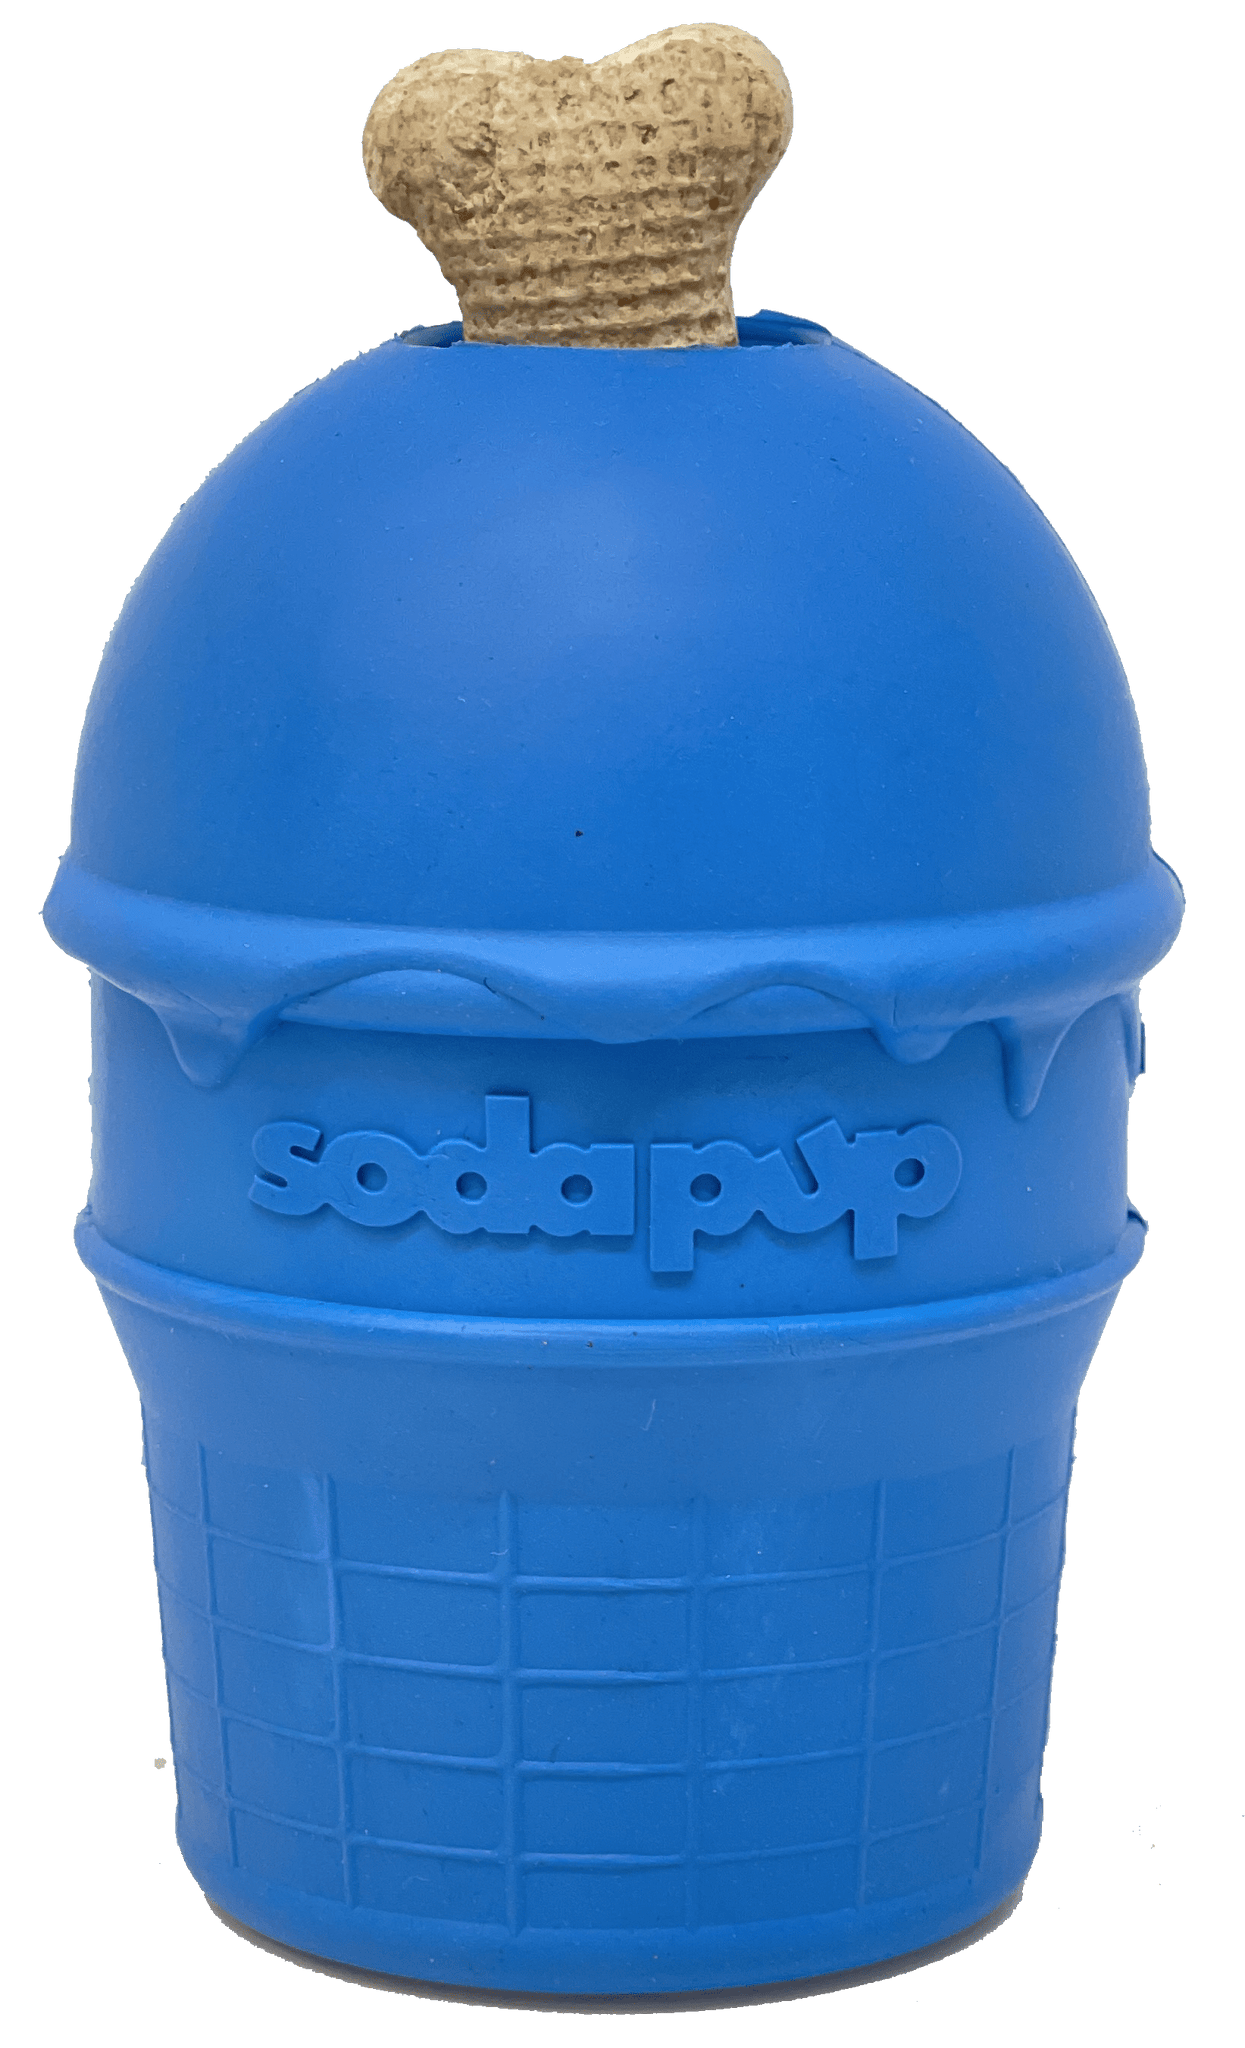 SP Ice Cream Cone Durable Rubber Chew Toy and Treat Dispenser - Medium Ice Cream Cone - Blue